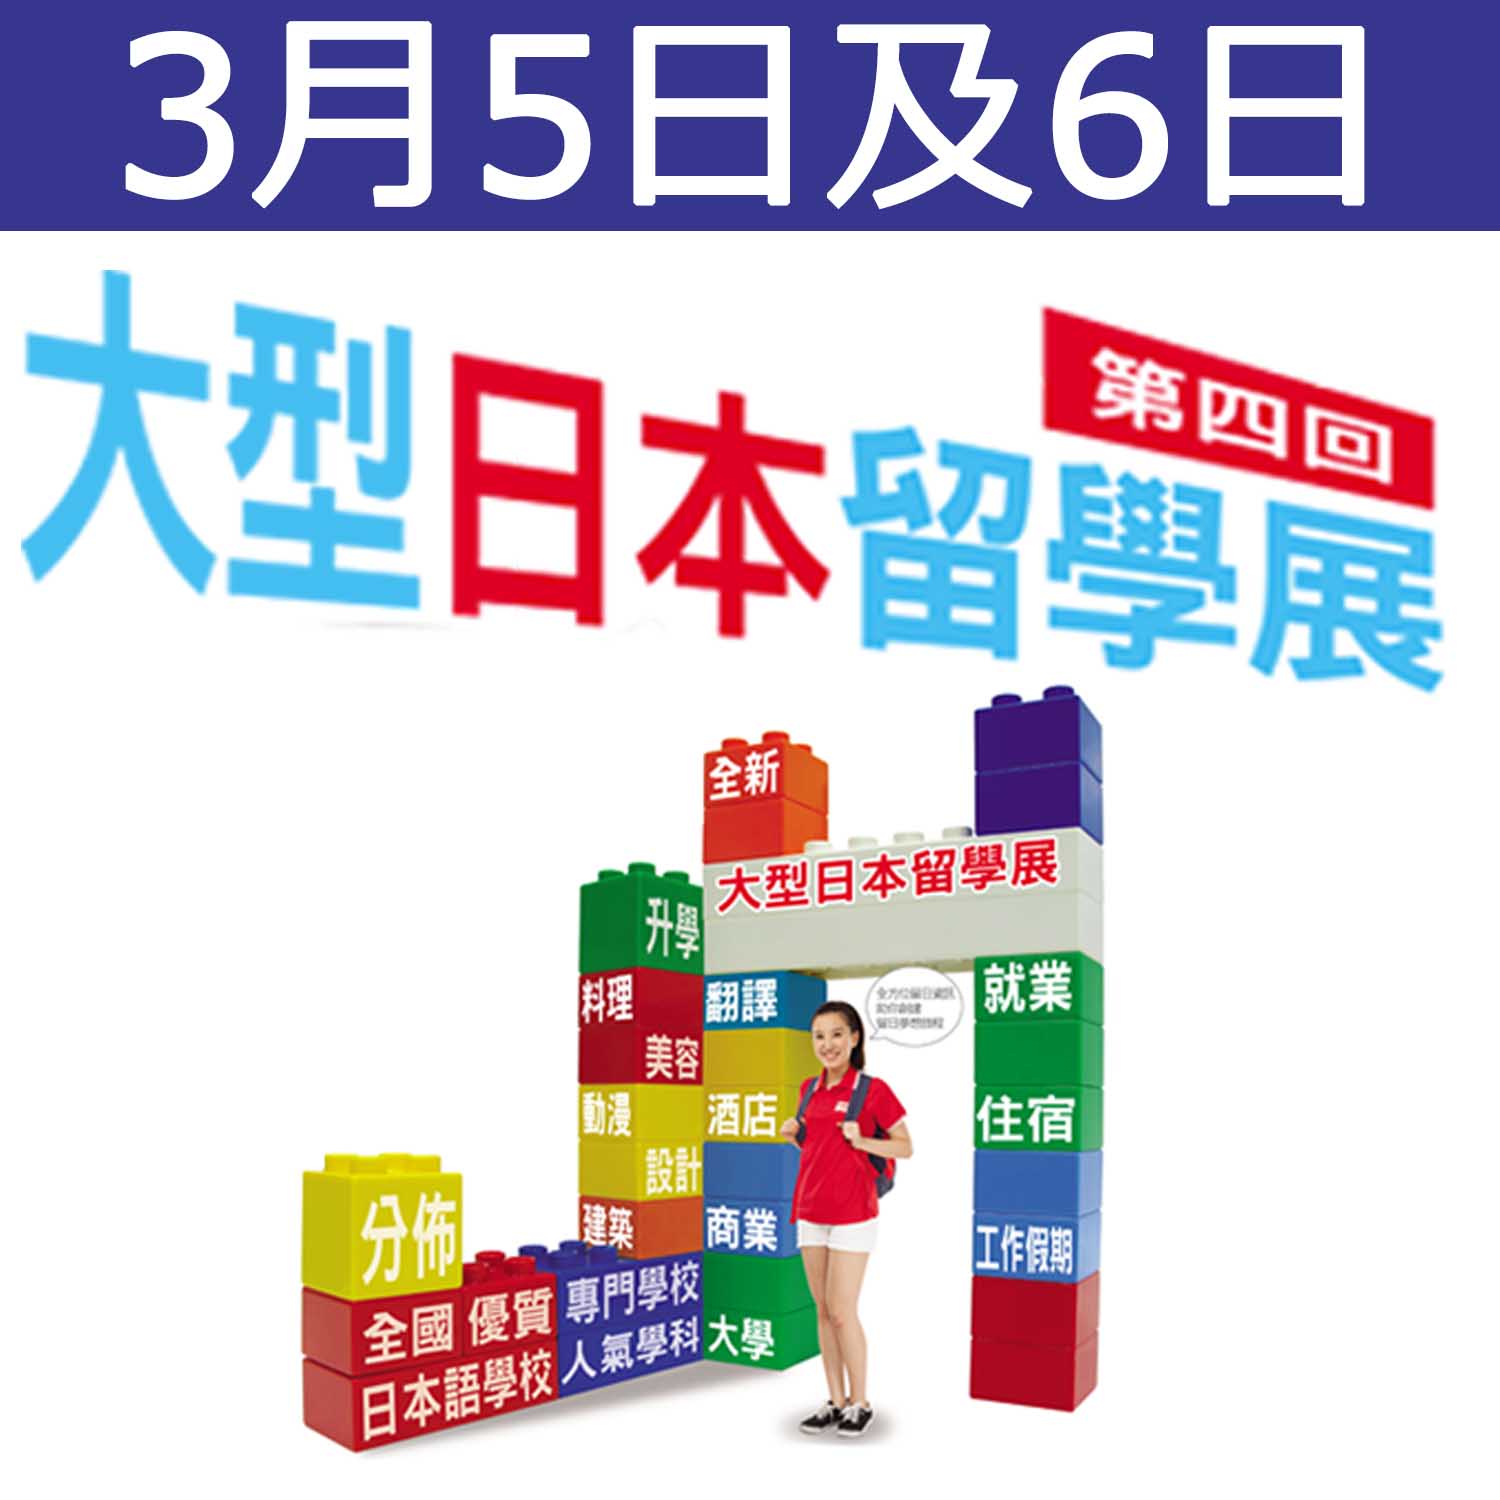 2016_305_6-logo